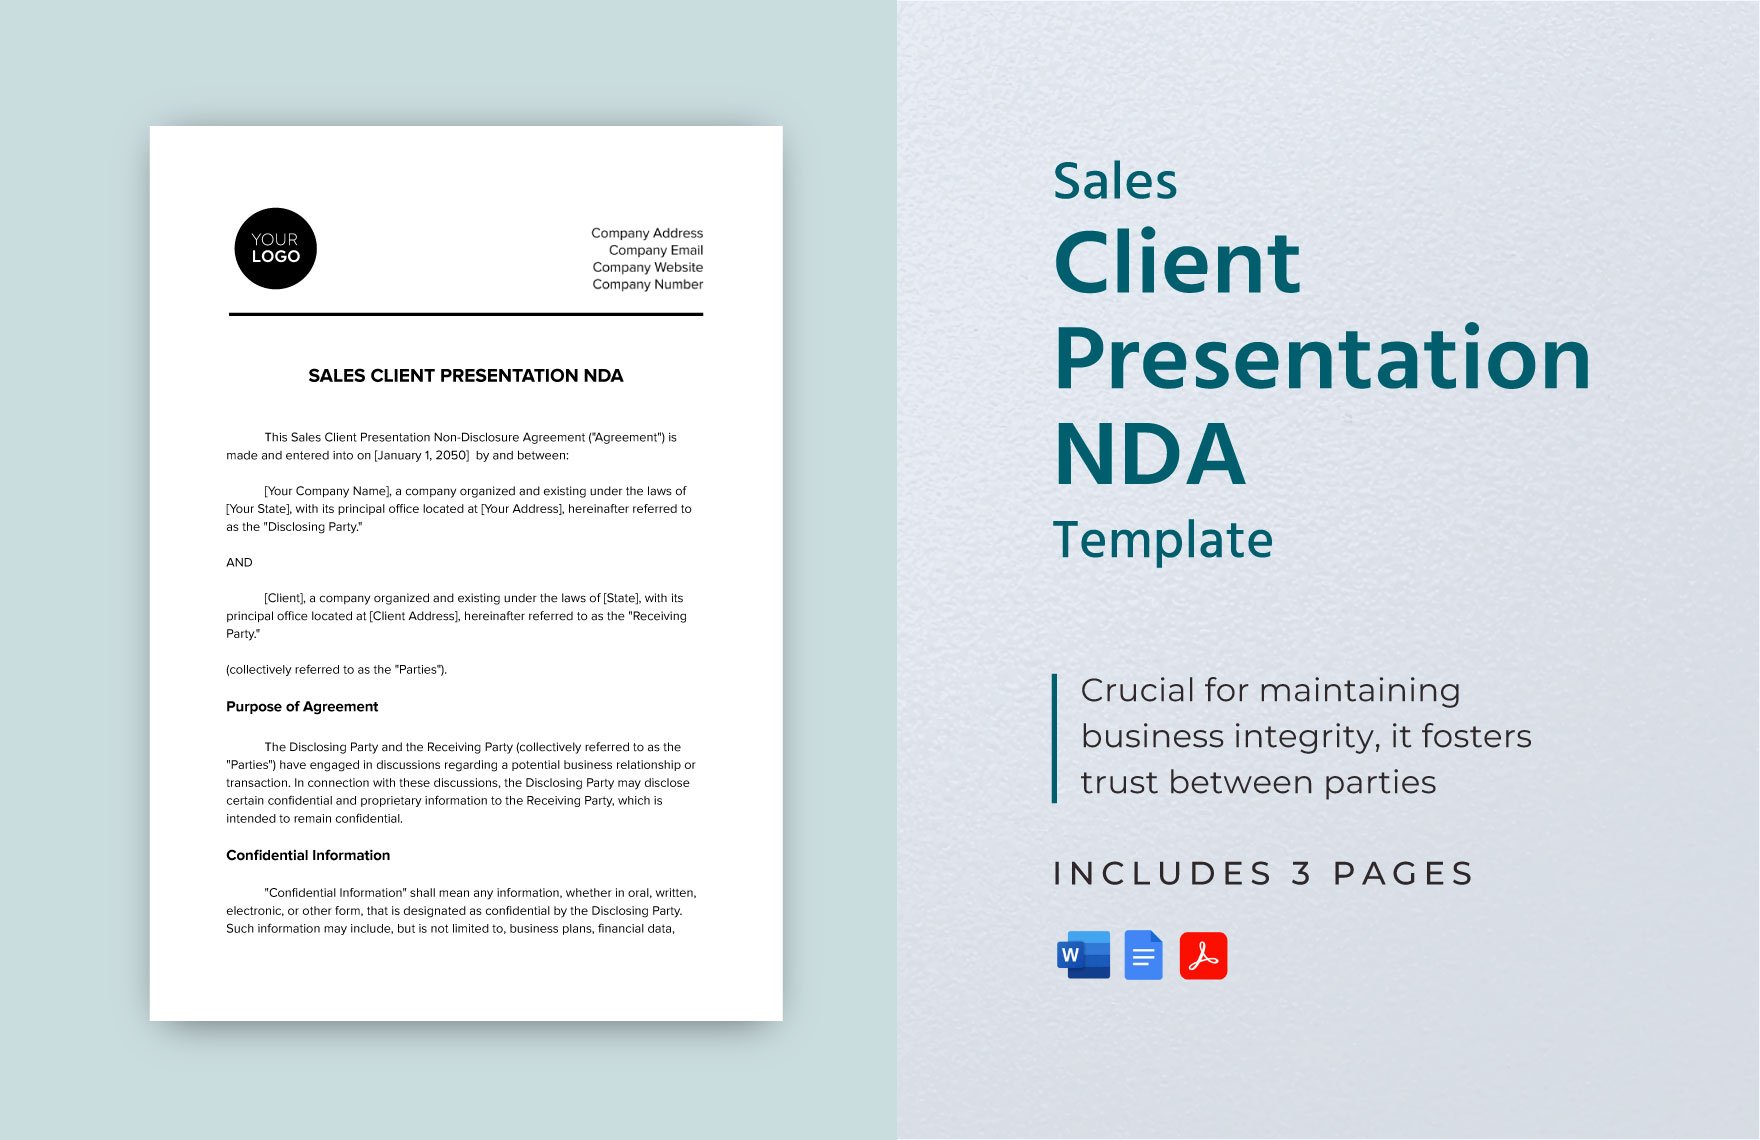 Sales Client Presentation NDA Template in Word, Google Docs, PDF